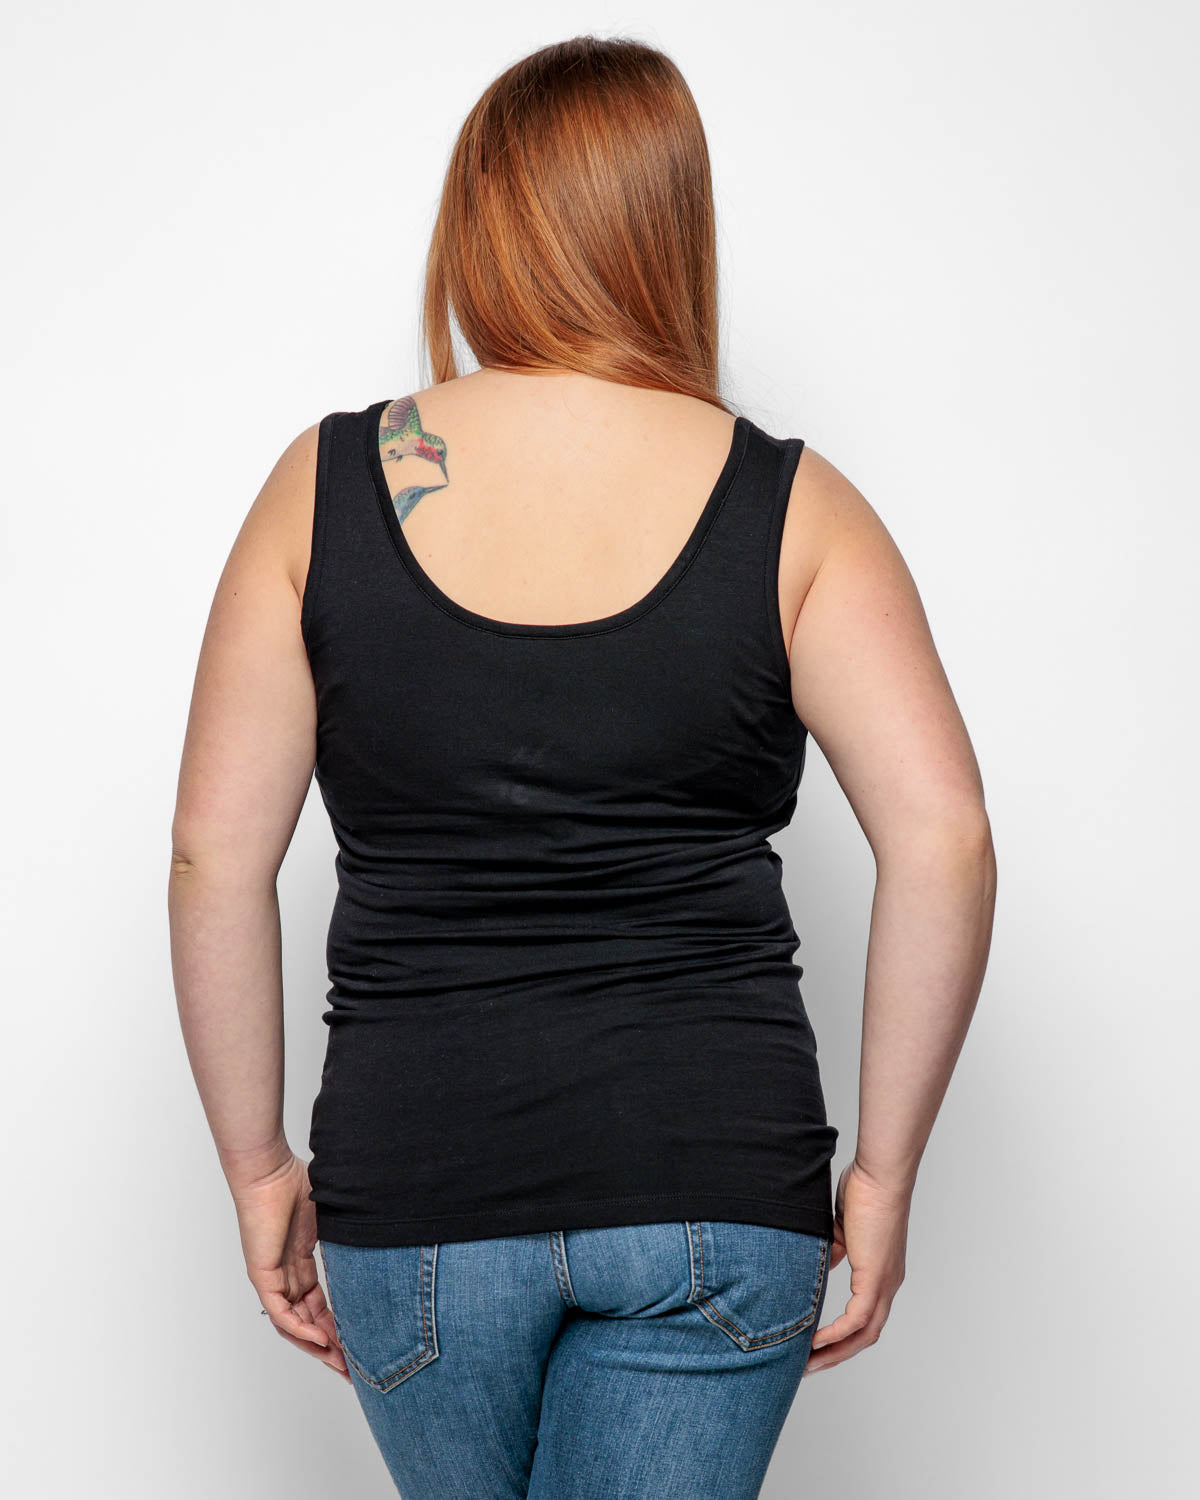 Maternity Vest Top in Black Organic Cotton for pregnancy